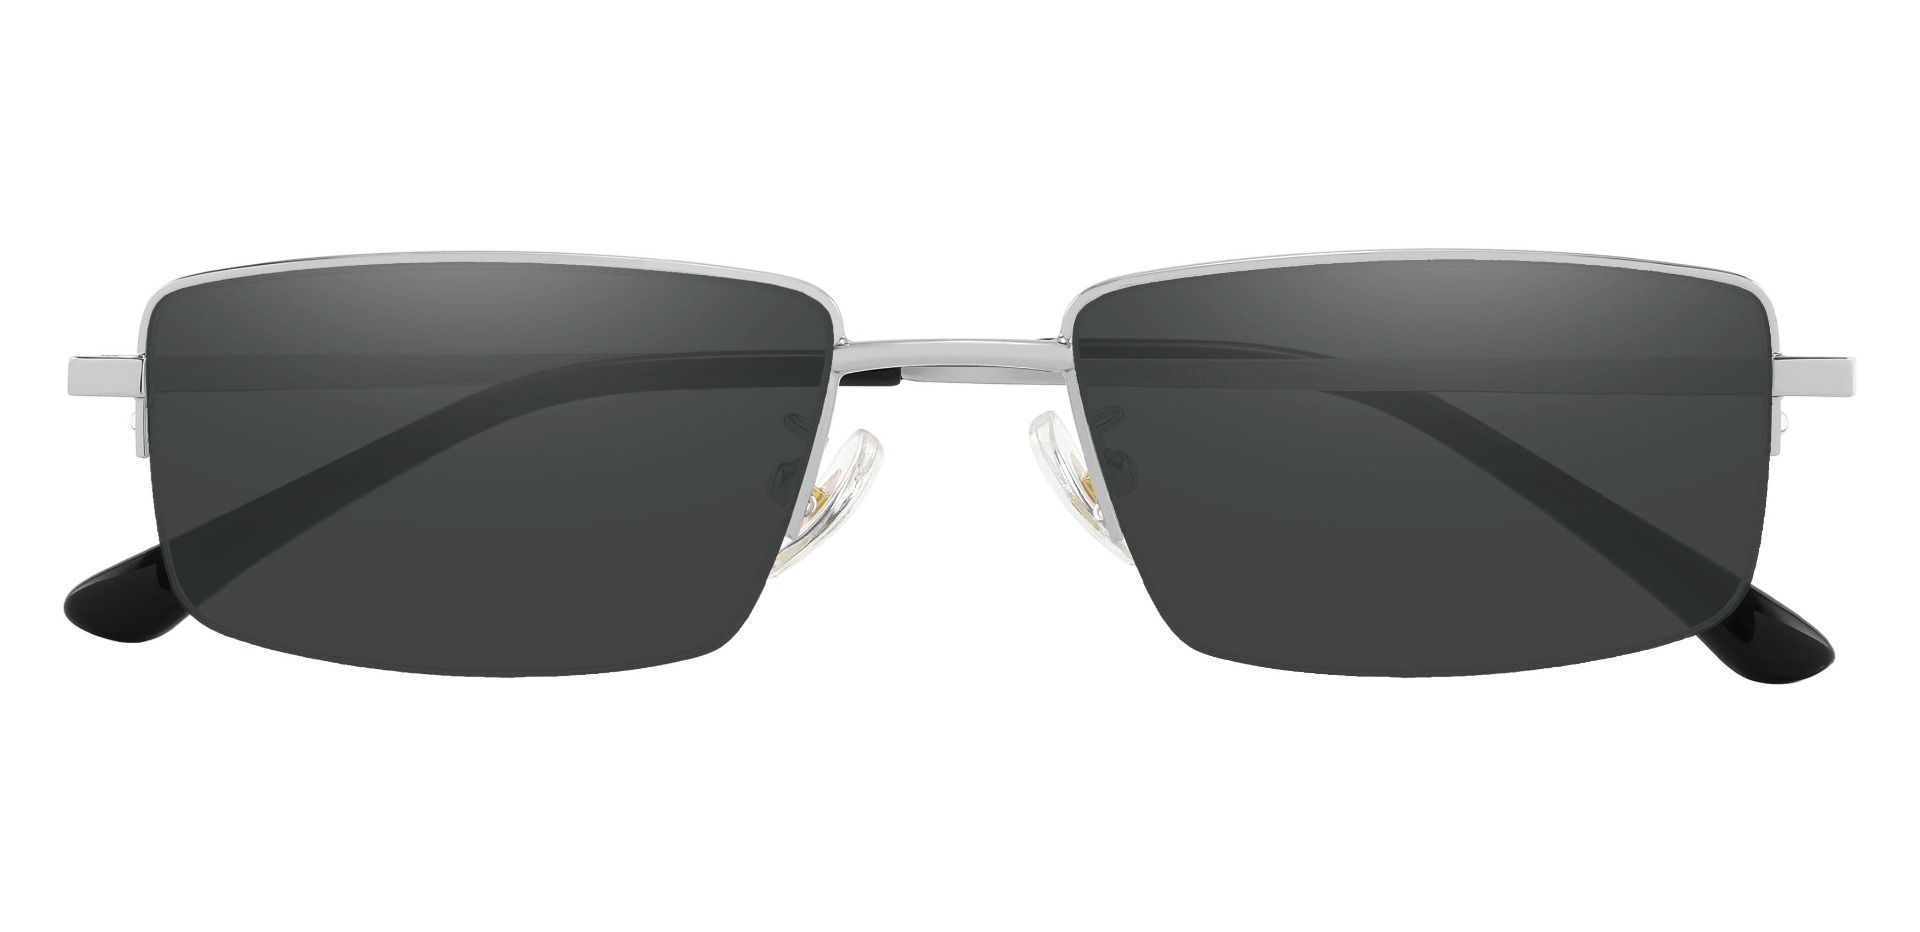 Waldo Rectangle Prescription Sunglasses - Silver Frame With Gray Lenses